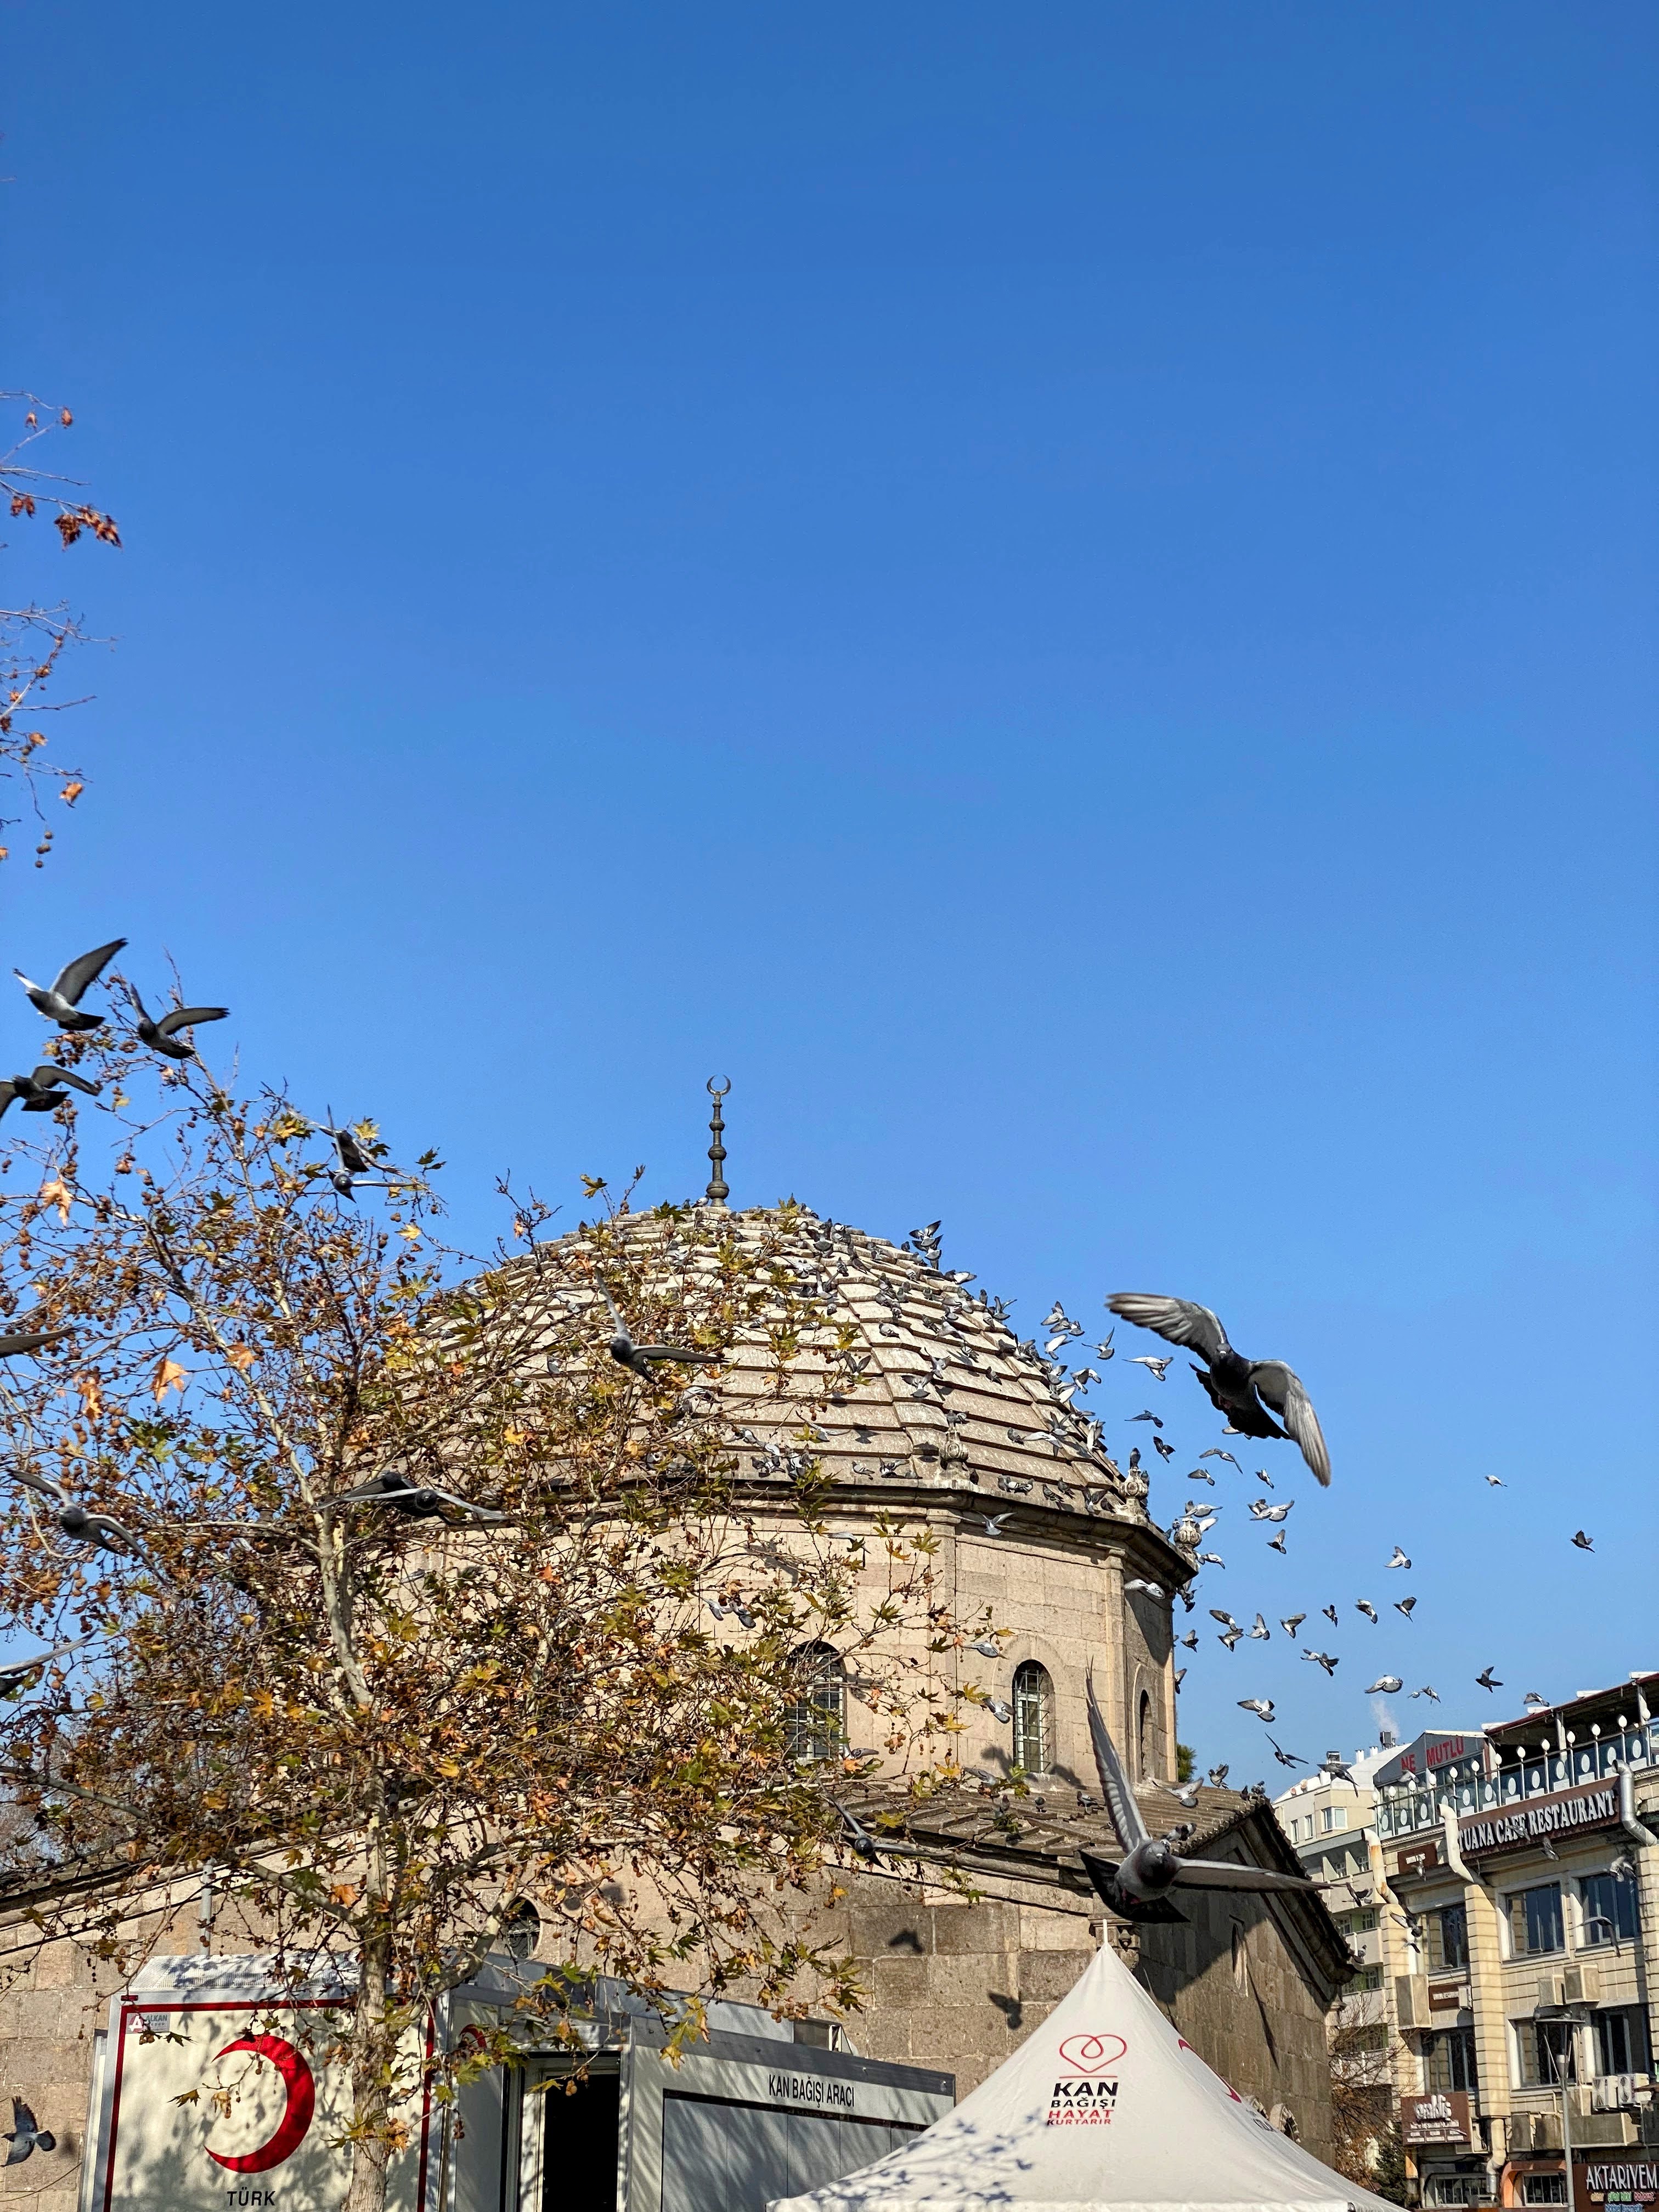 Pigeons around the city center